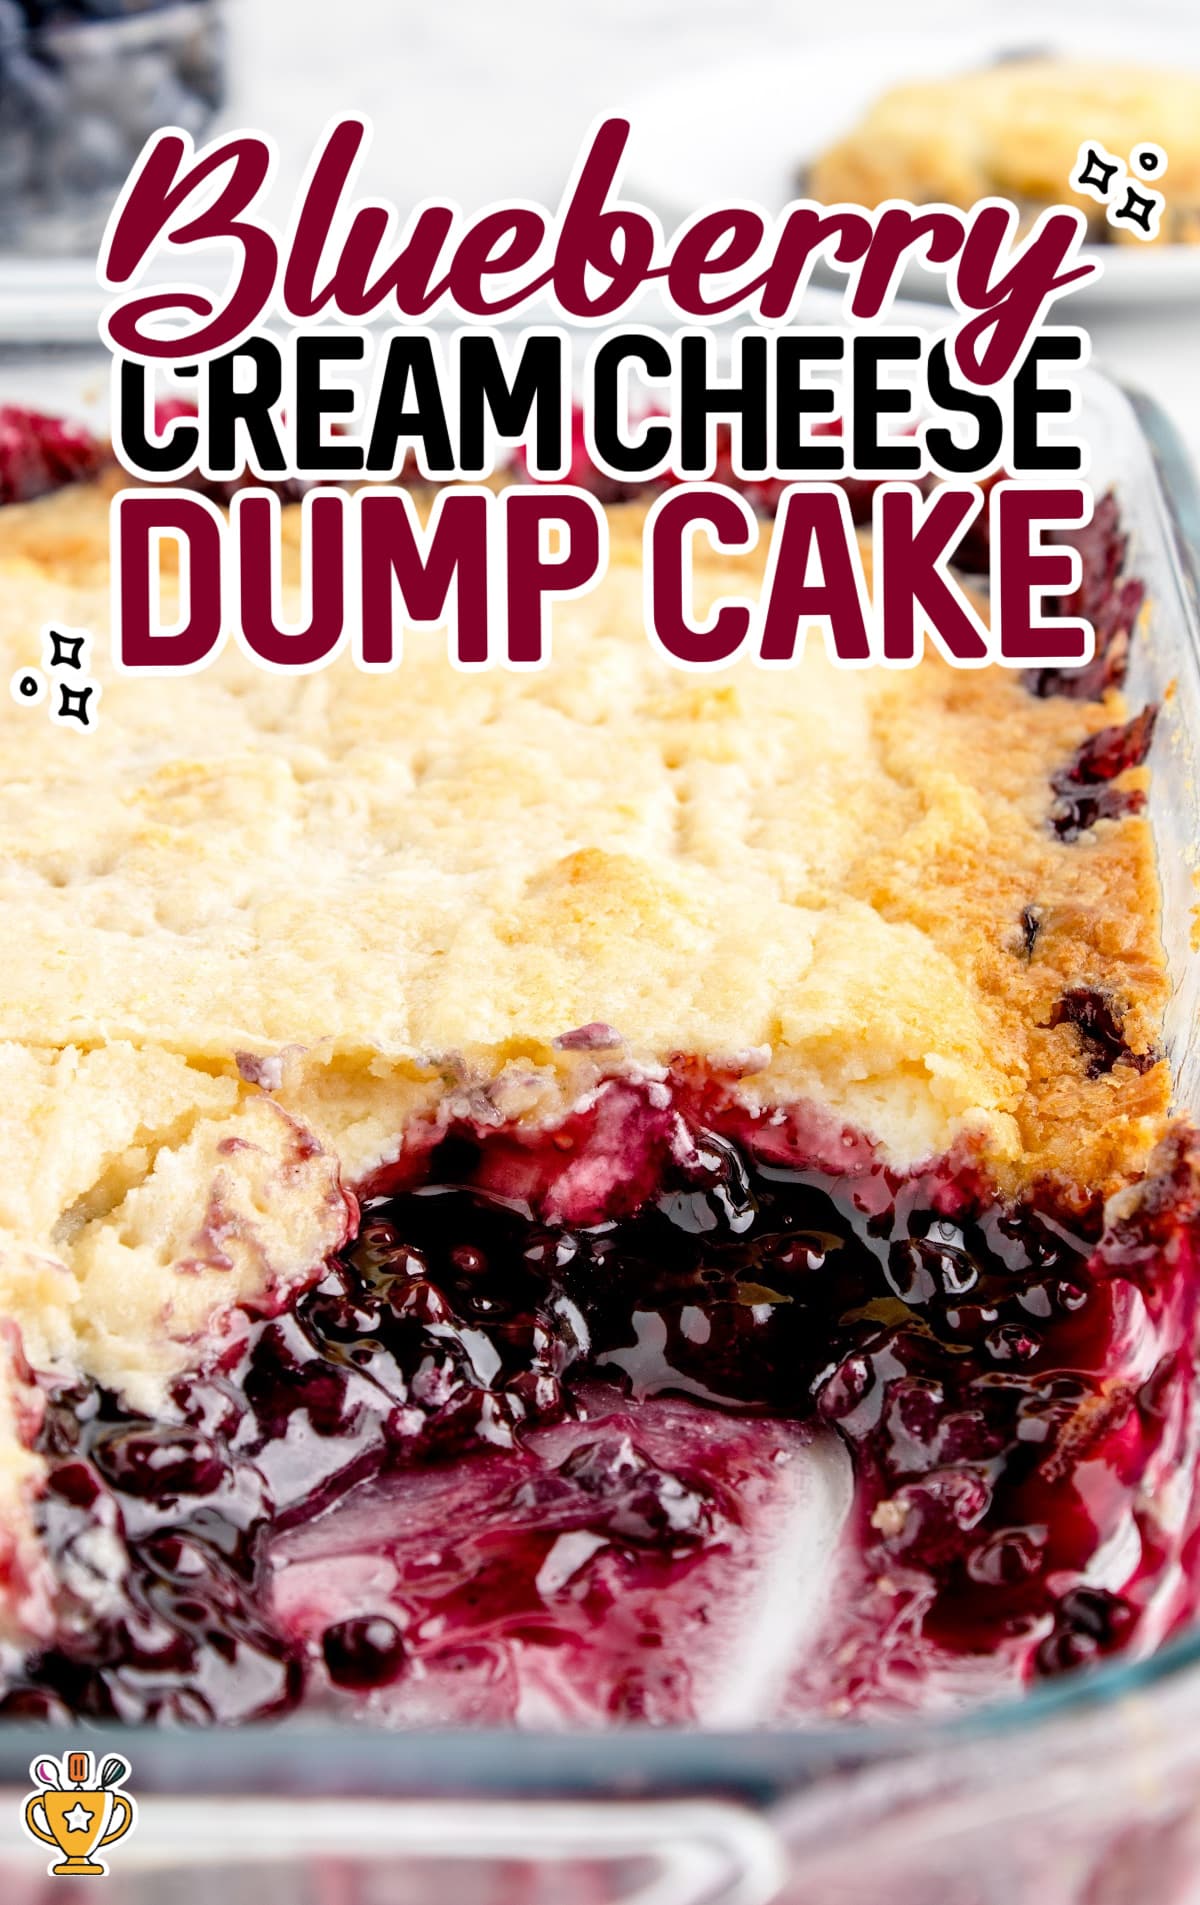 blueberry cream cheese dump cake in a 9x13 baking dish